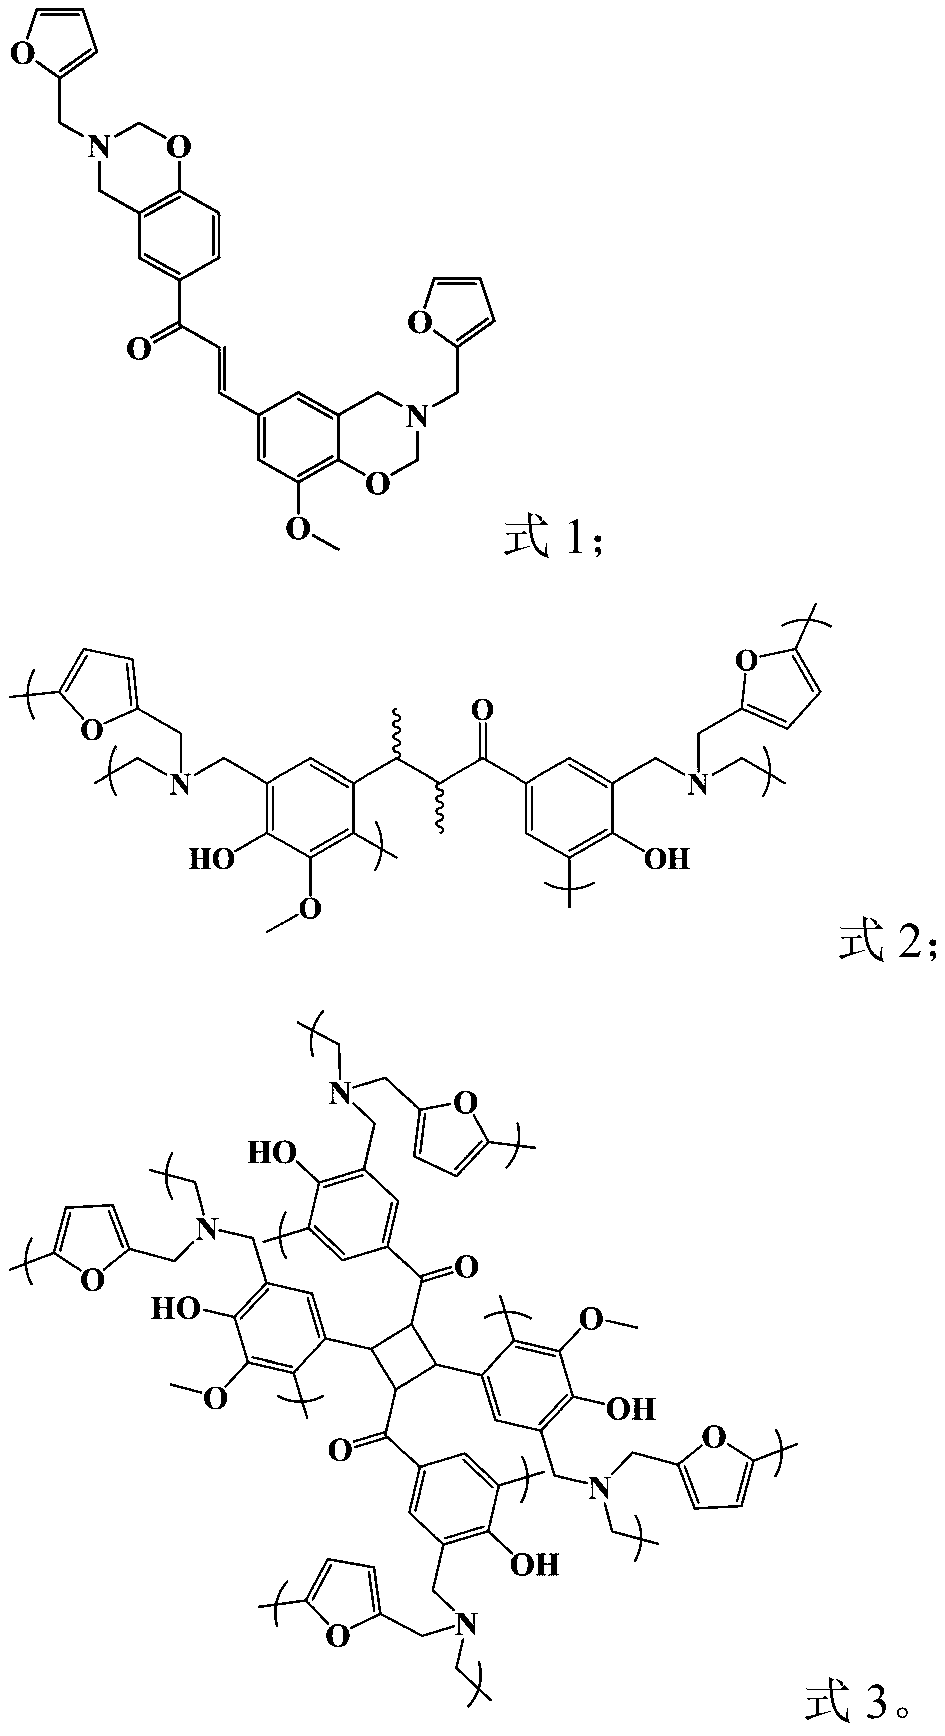 Full-bio-based benzoxazine resin and preparation method thereof